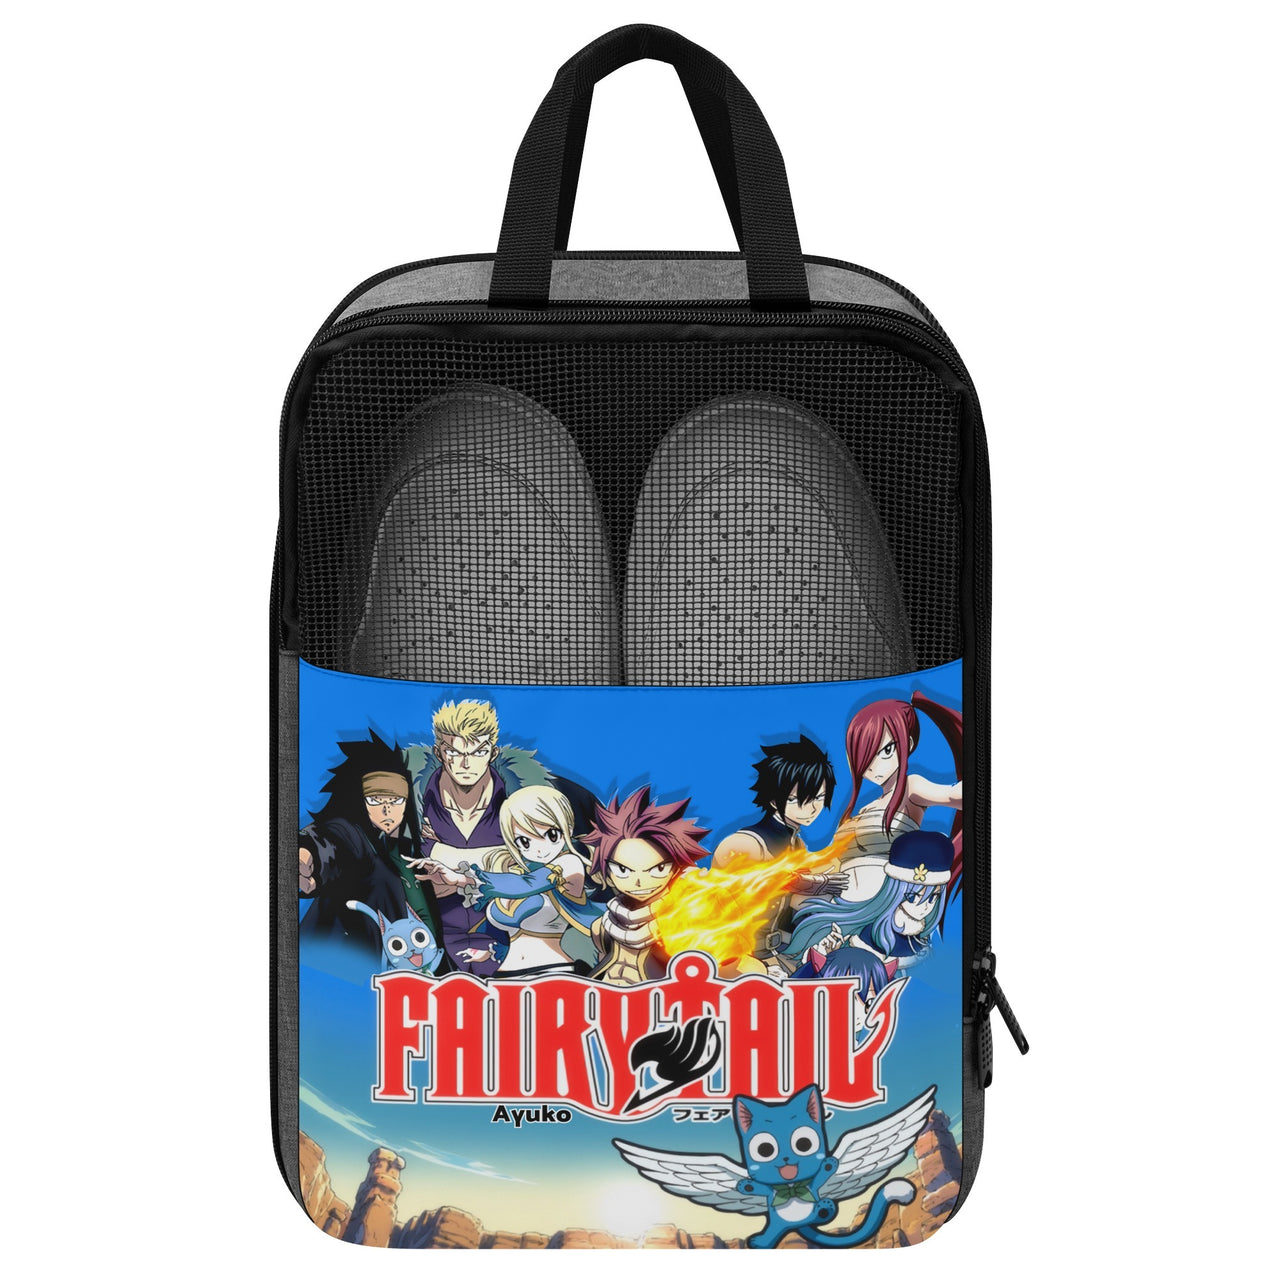 Fairy Tail Anime Shoe Bag